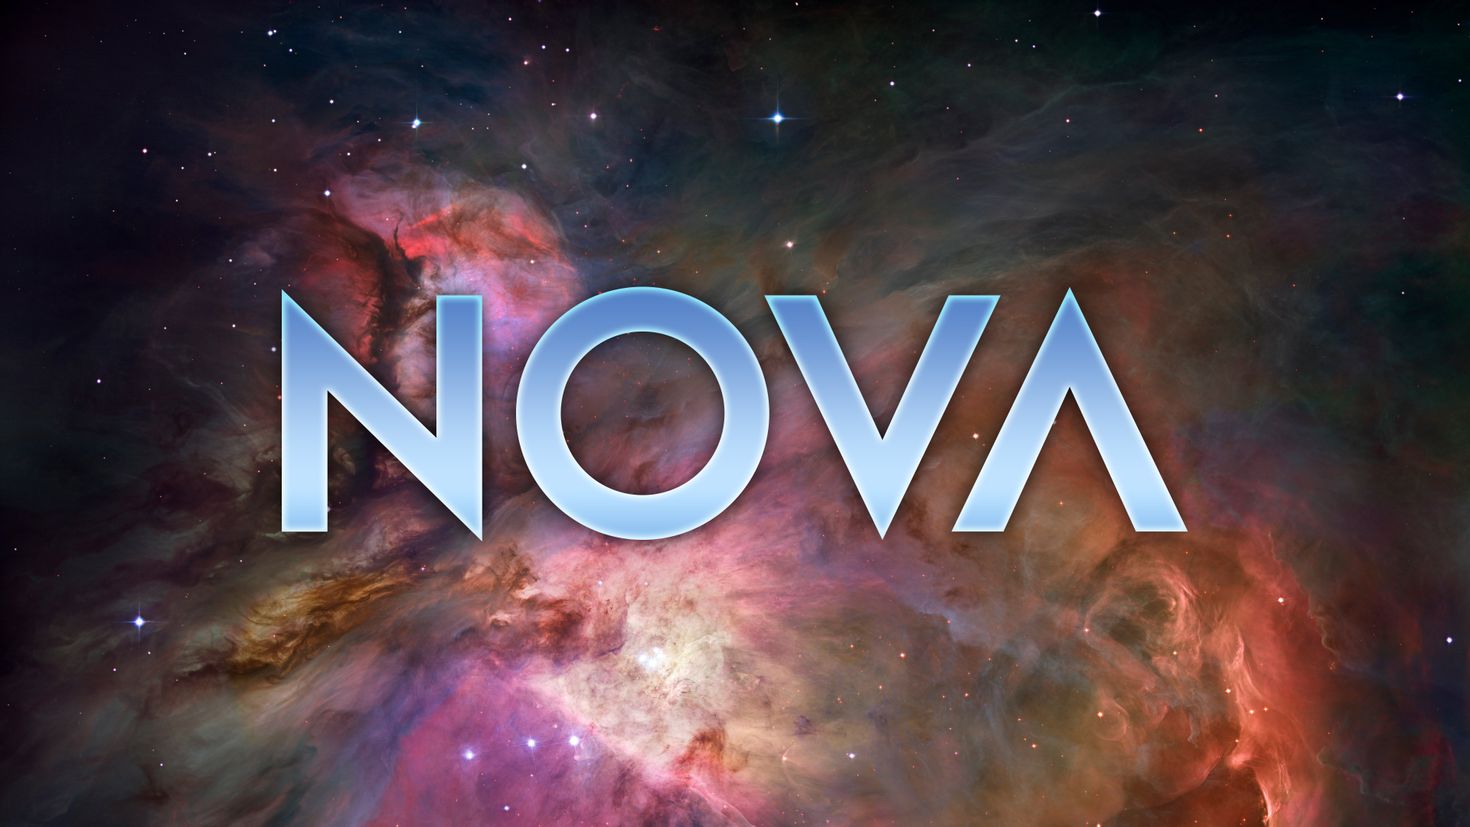 Картинка нова. Nova картинки. Nova надпись. Надпись Novak. Обои Nova 4к.